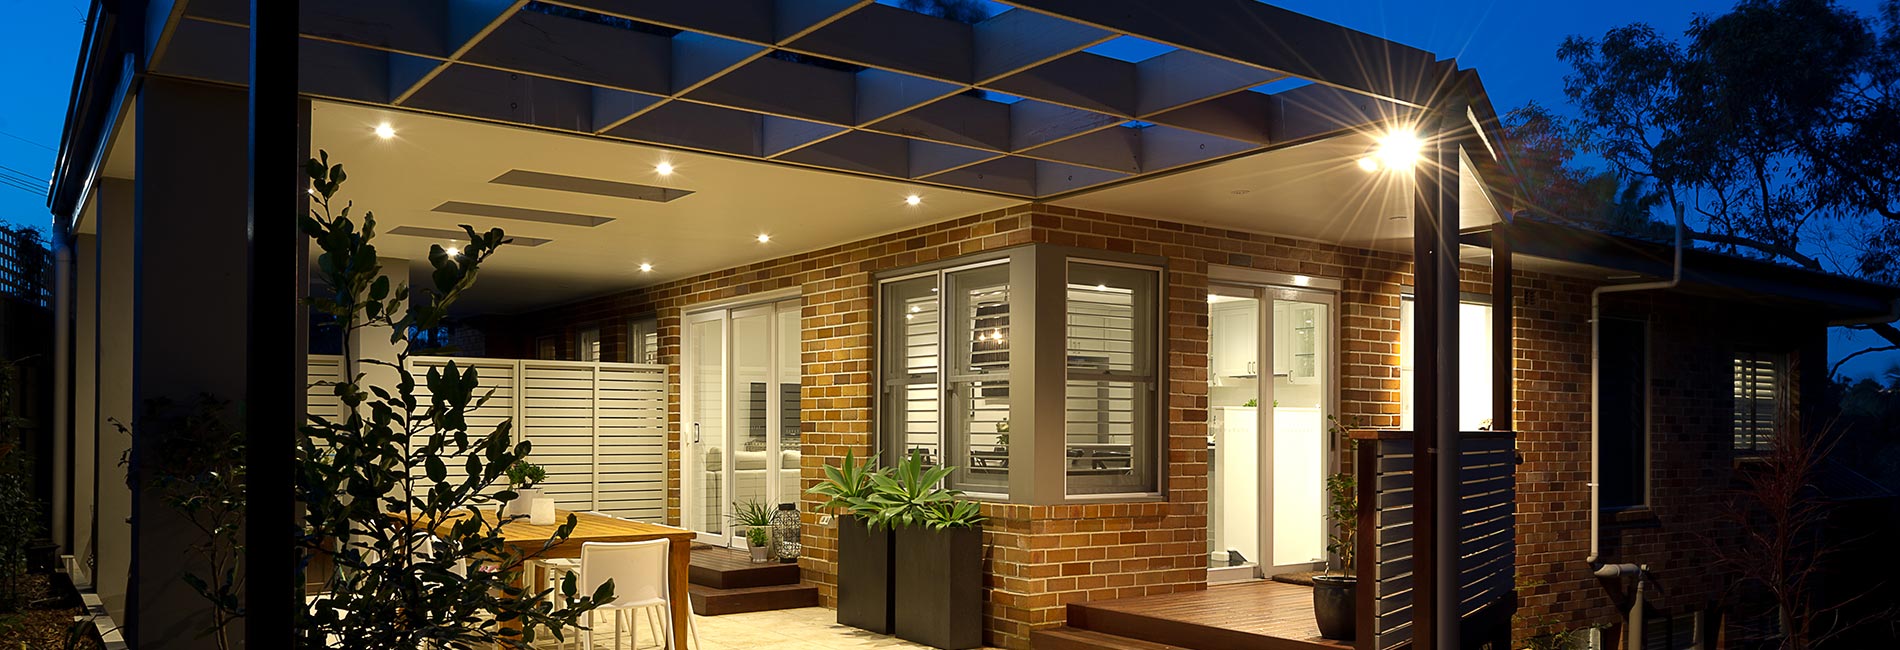 Home Design Sydney